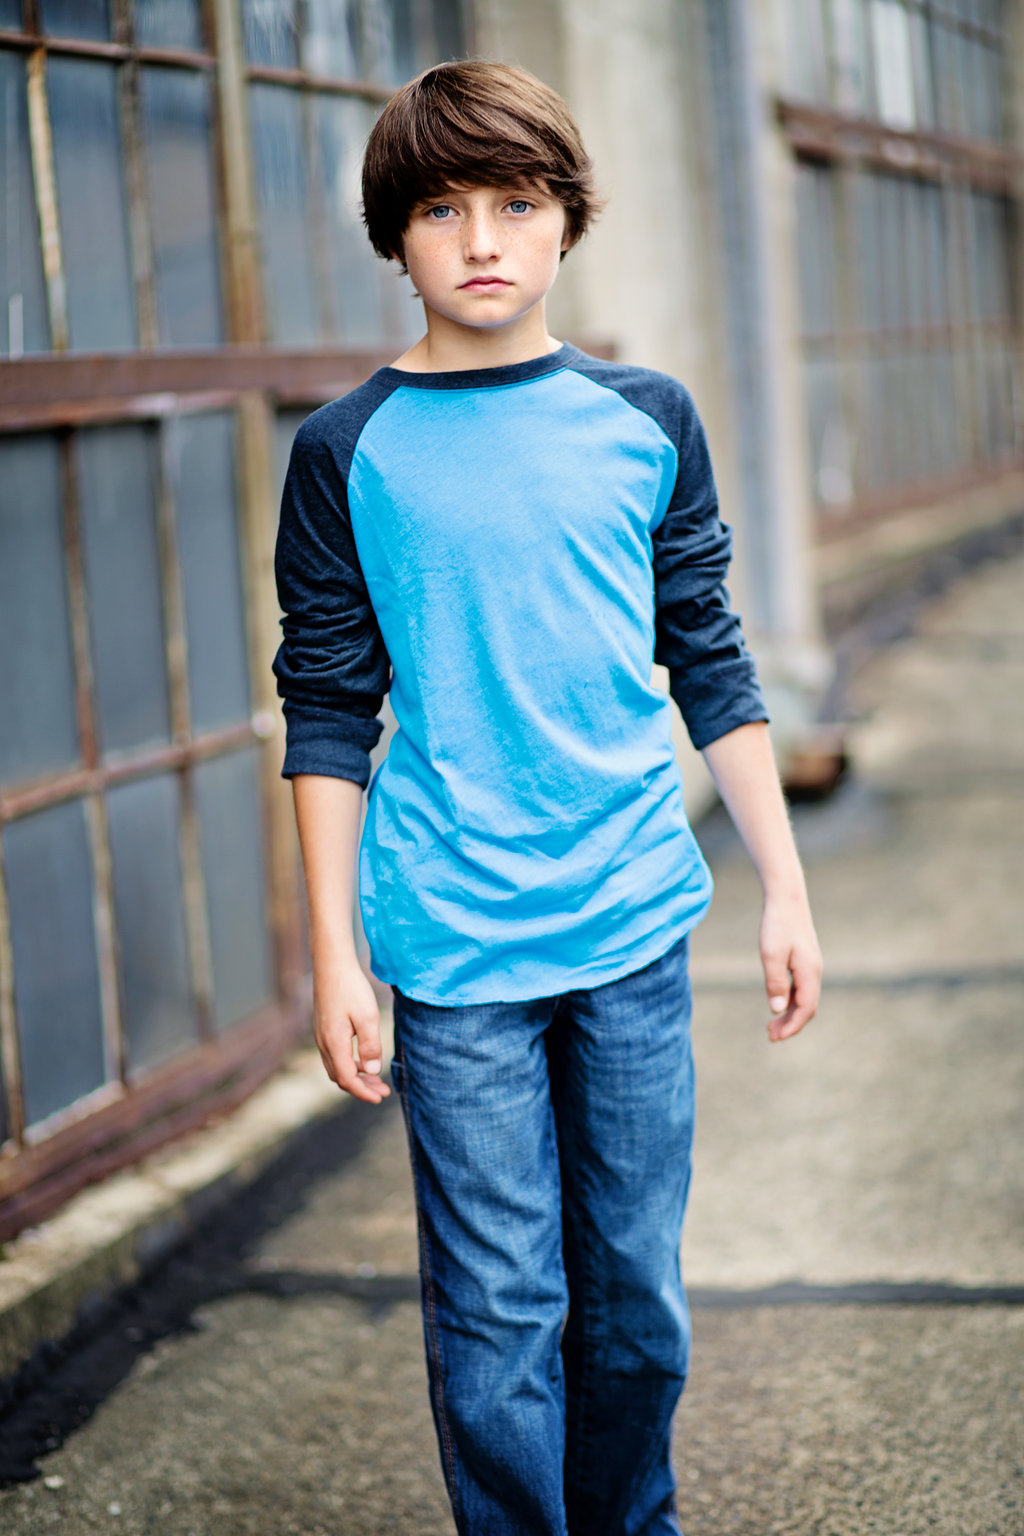 Elliott Sancrant Child Actor Fall 2015